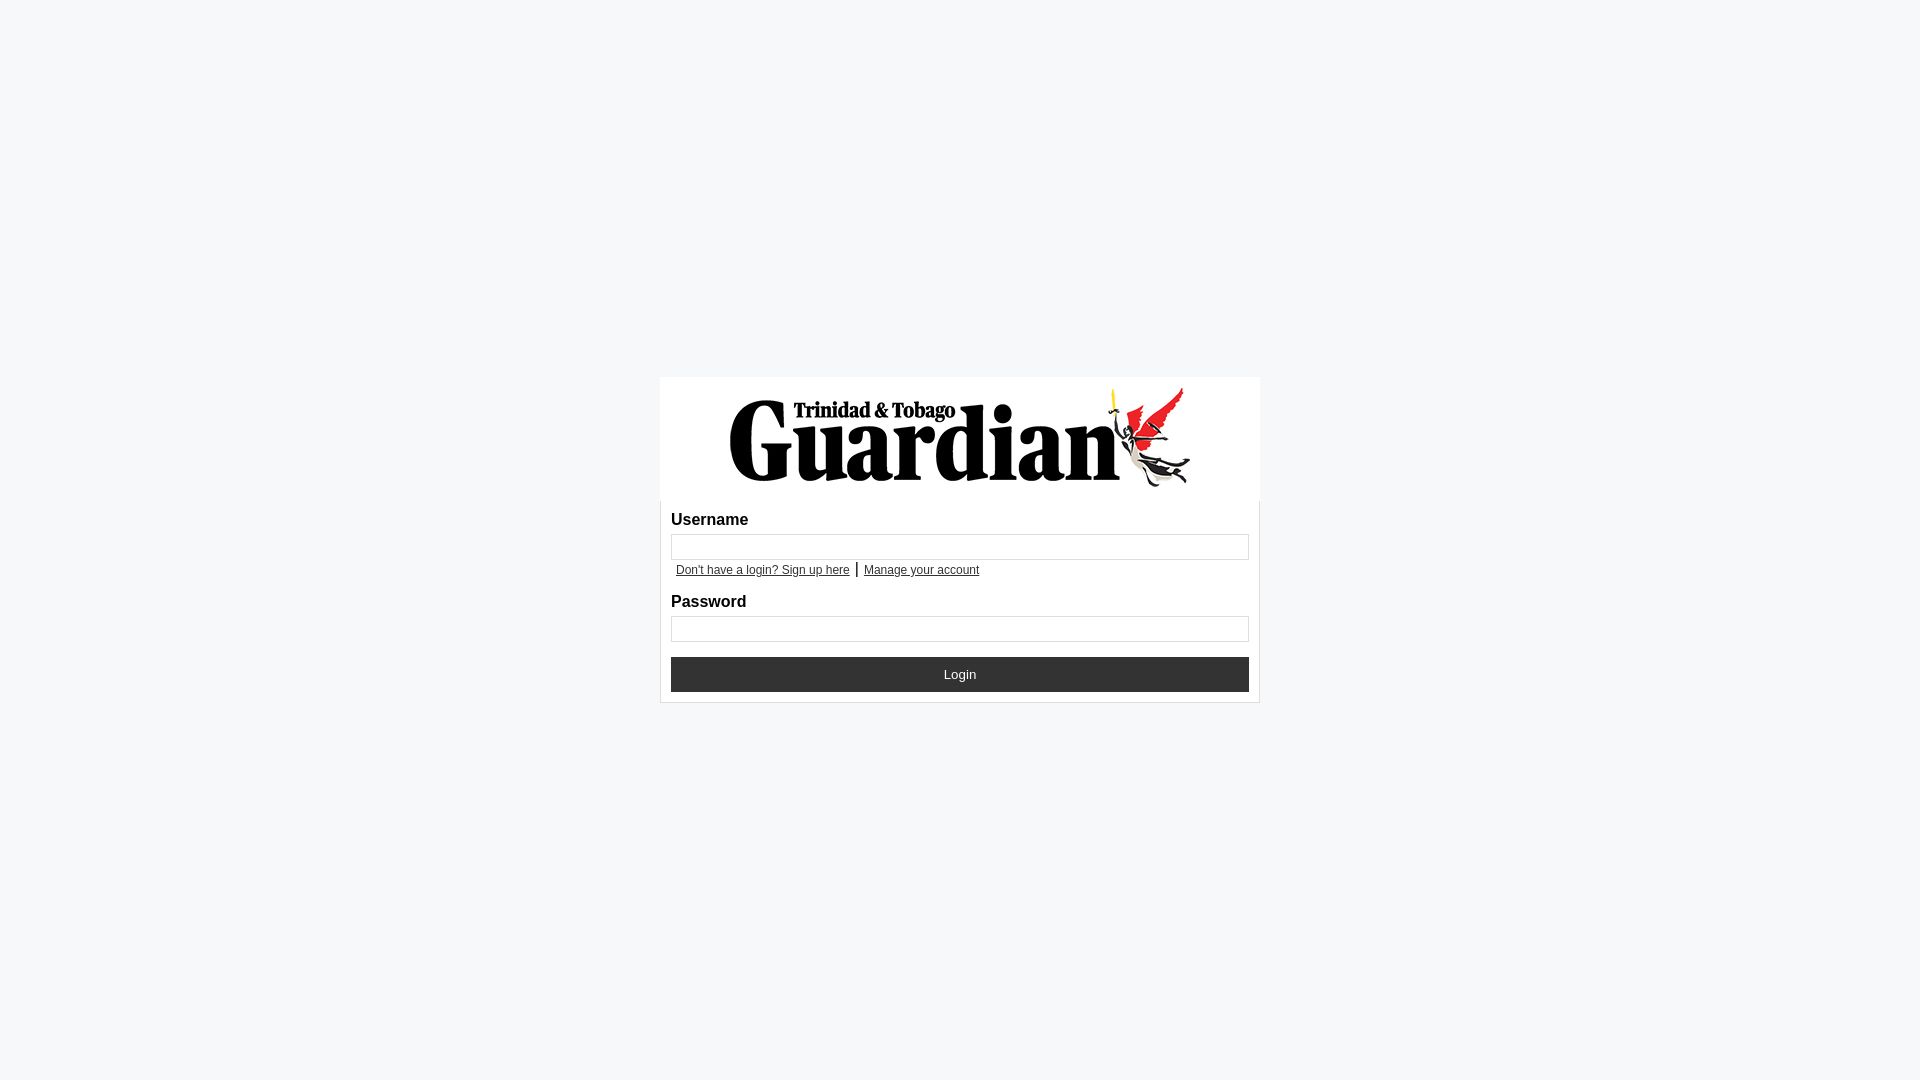 Estado web digital.guardian.co.tt está   ONLINE